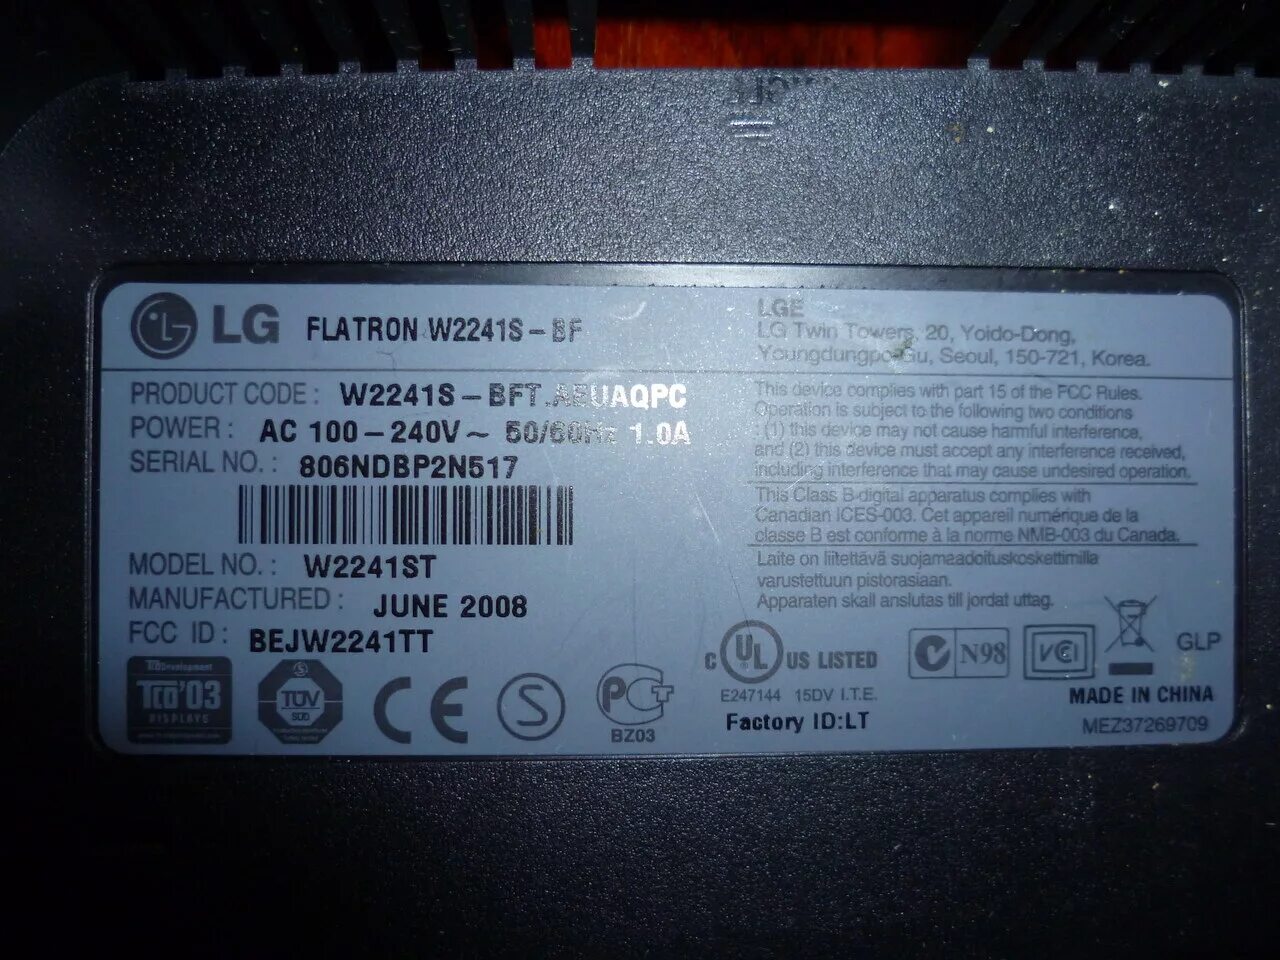 LG Flatron w2241s. Монитор LG w2241s-bf. Монитор LG Flatron w2241s. Claa220wa01.